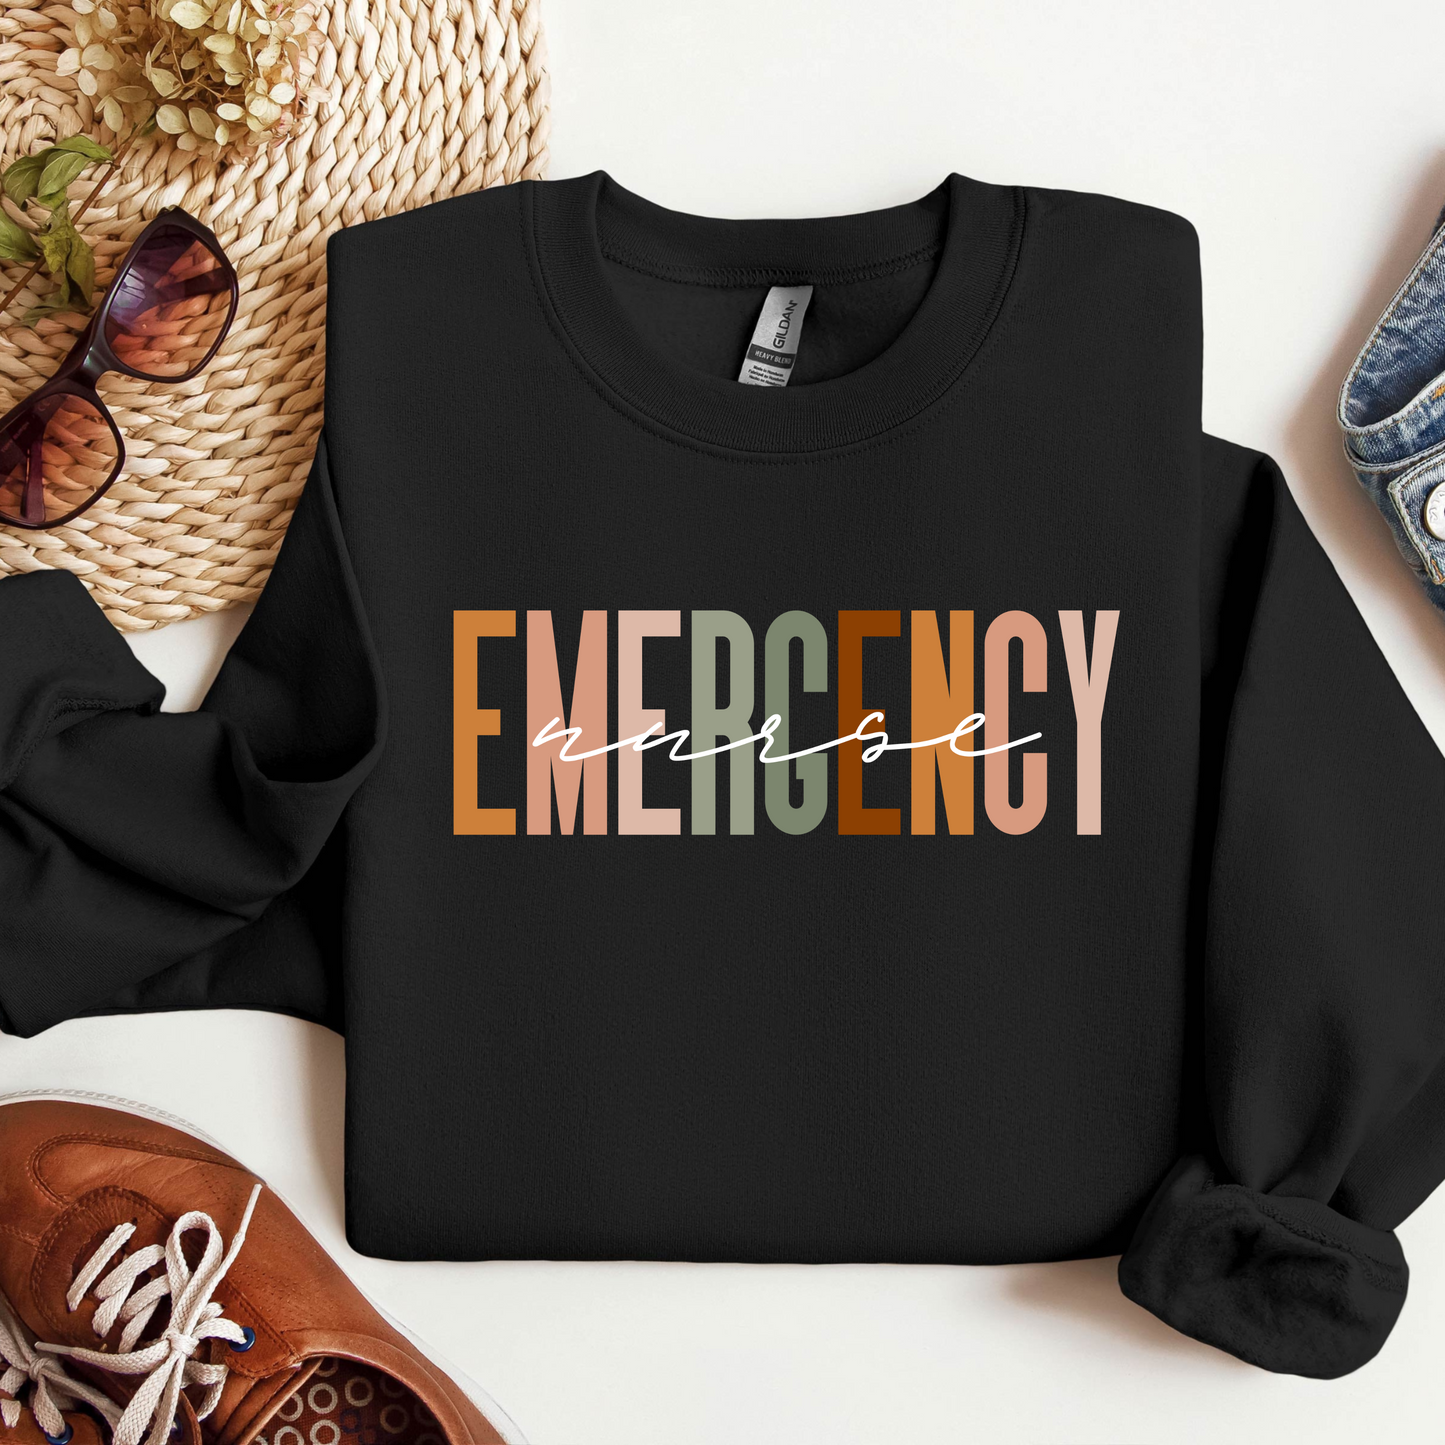 Emergency Services Nurse Shirt – A Thank You for ER Care